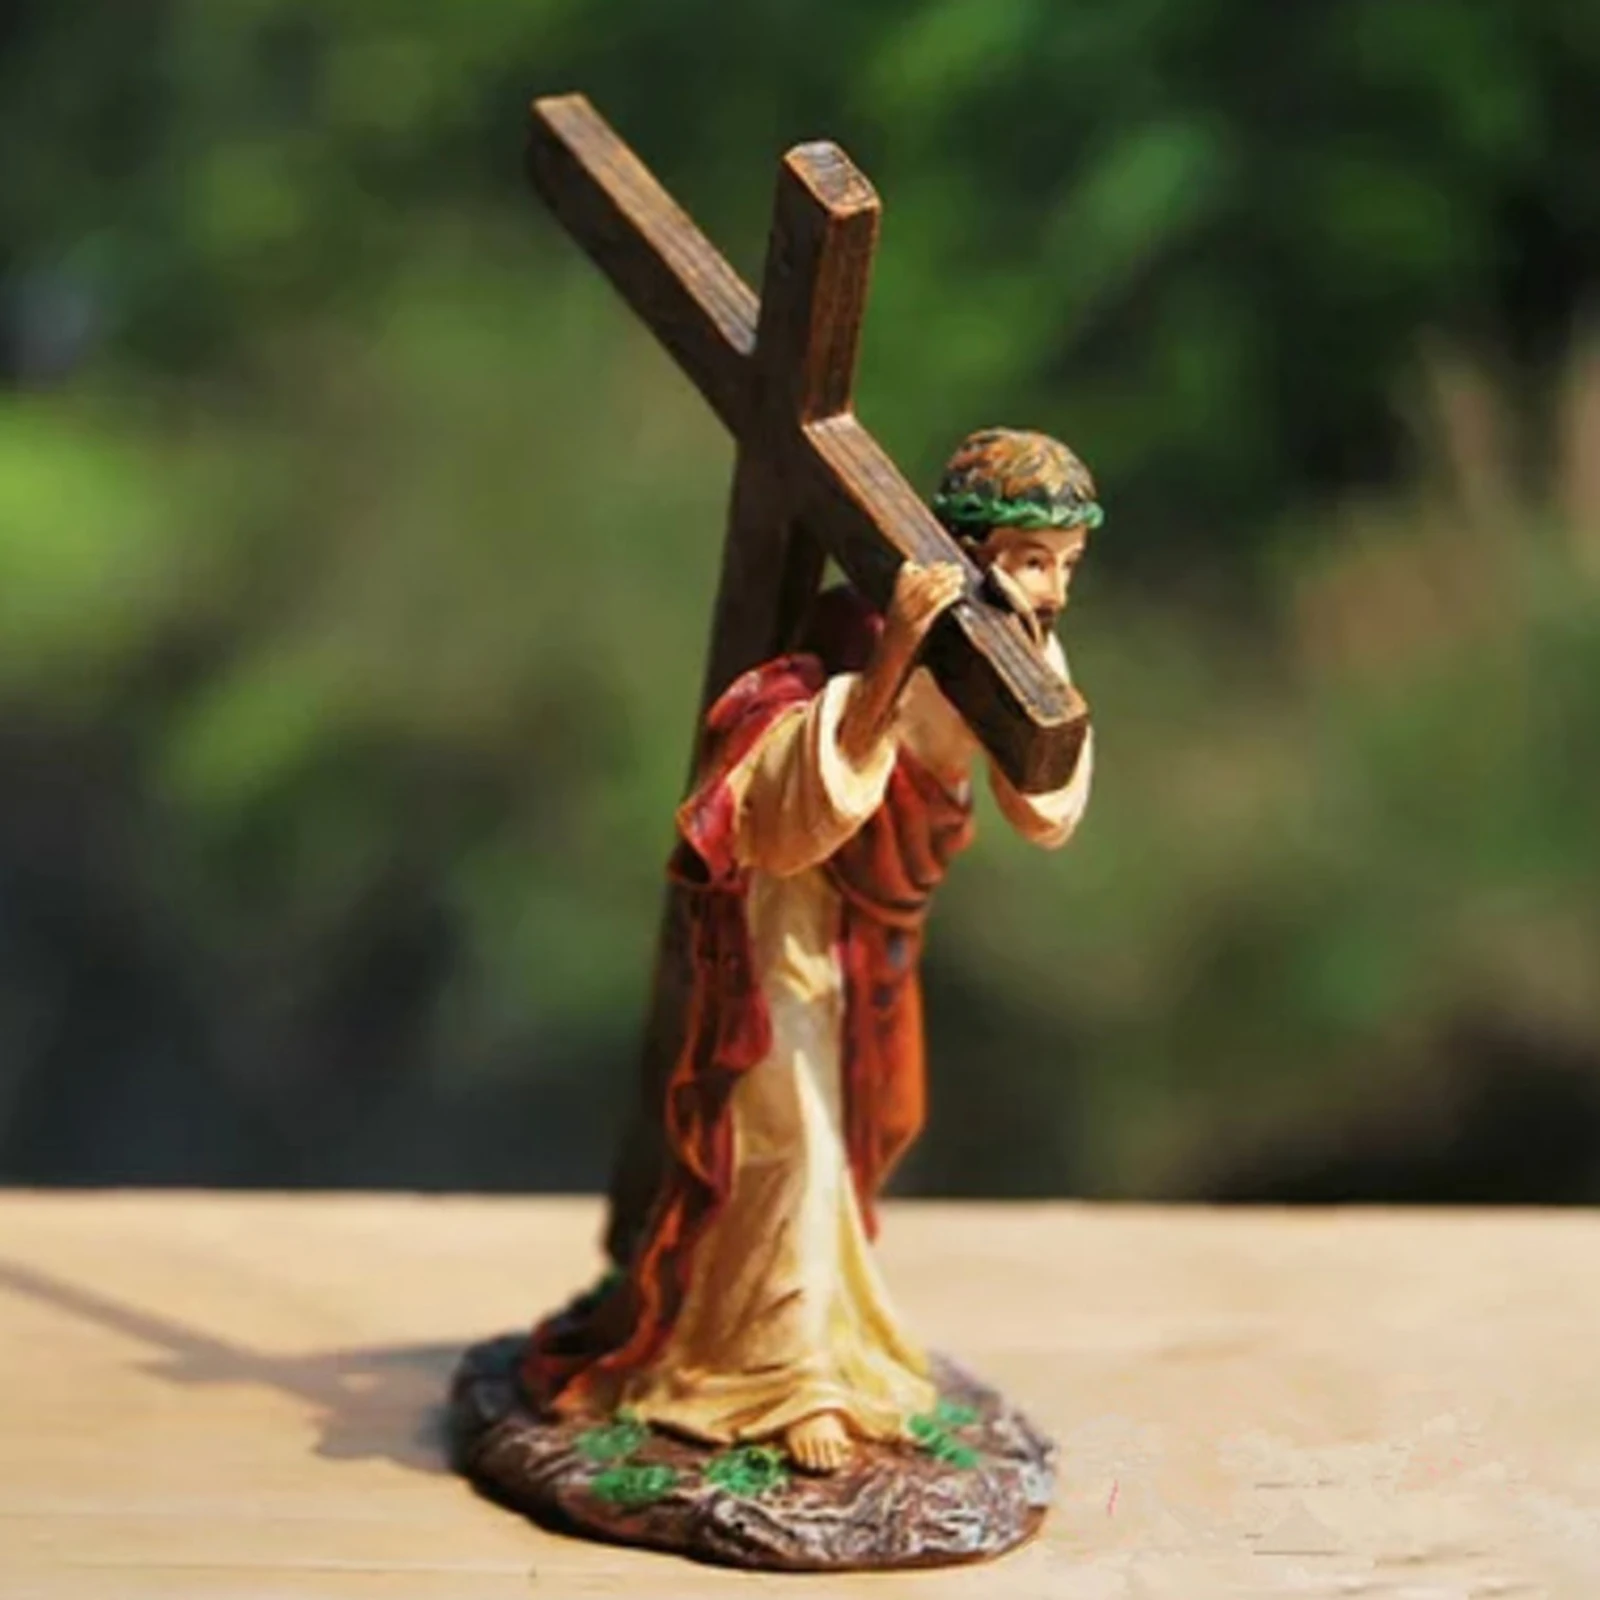 Resin Cross Crucifix Jesus Statue Figurine Christian Car Decoration Home Furnishing Accessories Religious Catholic Gift